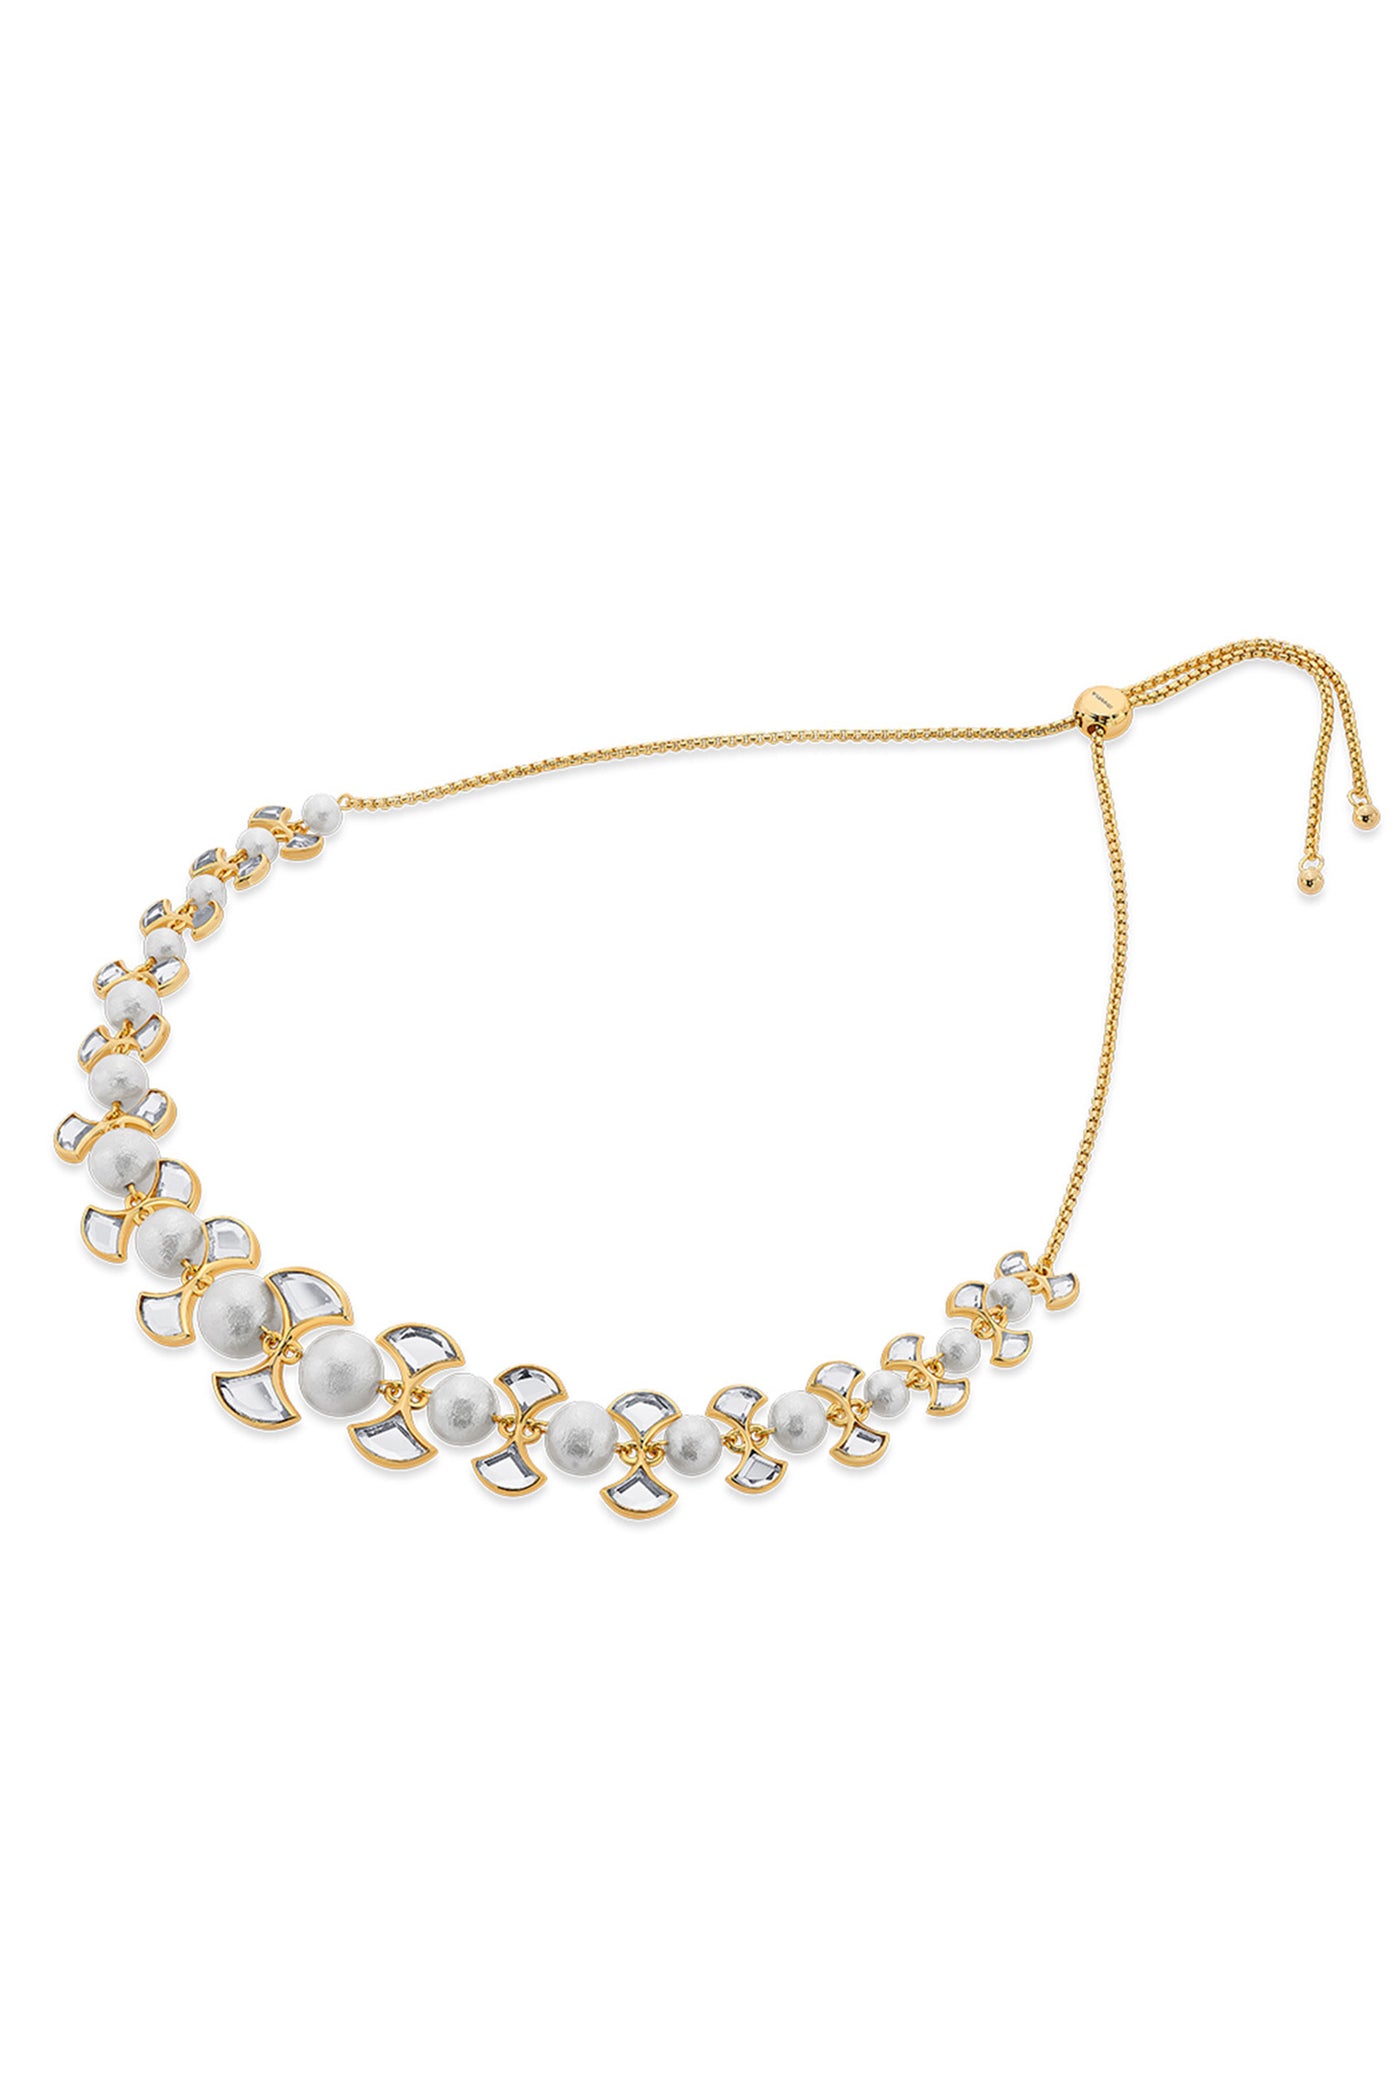 Isharya Amara Mirror Pearl Necklace fashion jewellery online shopping melange singapore indian designer wear